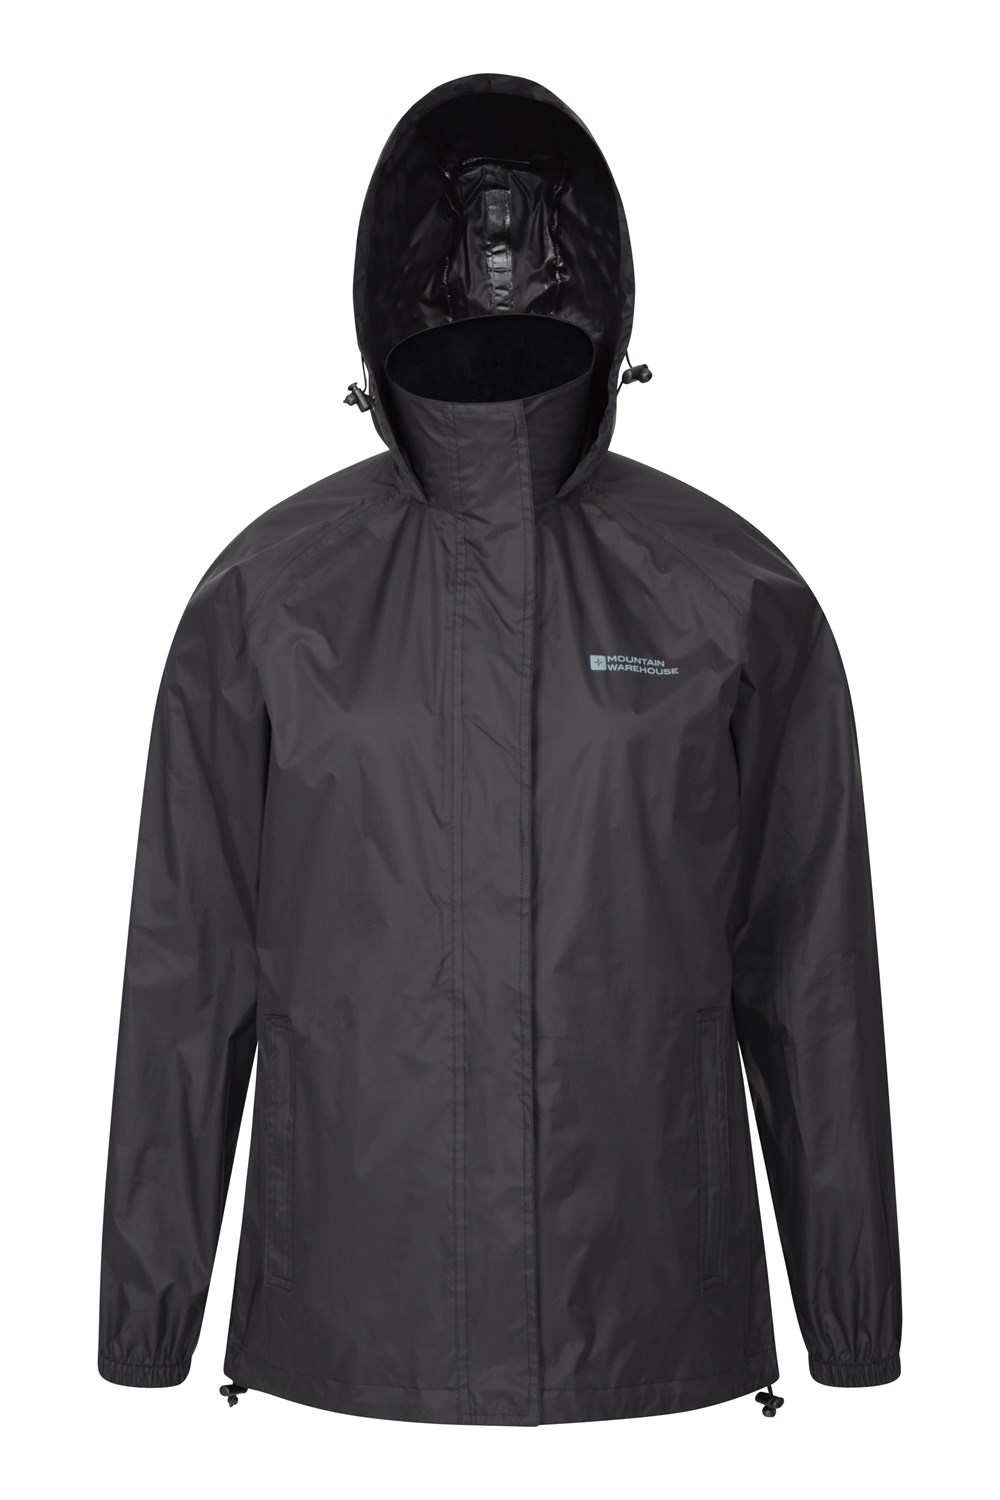 Mountain Warehouse Womens Rain Jacket Waterproof Packable Packaway Coat ...